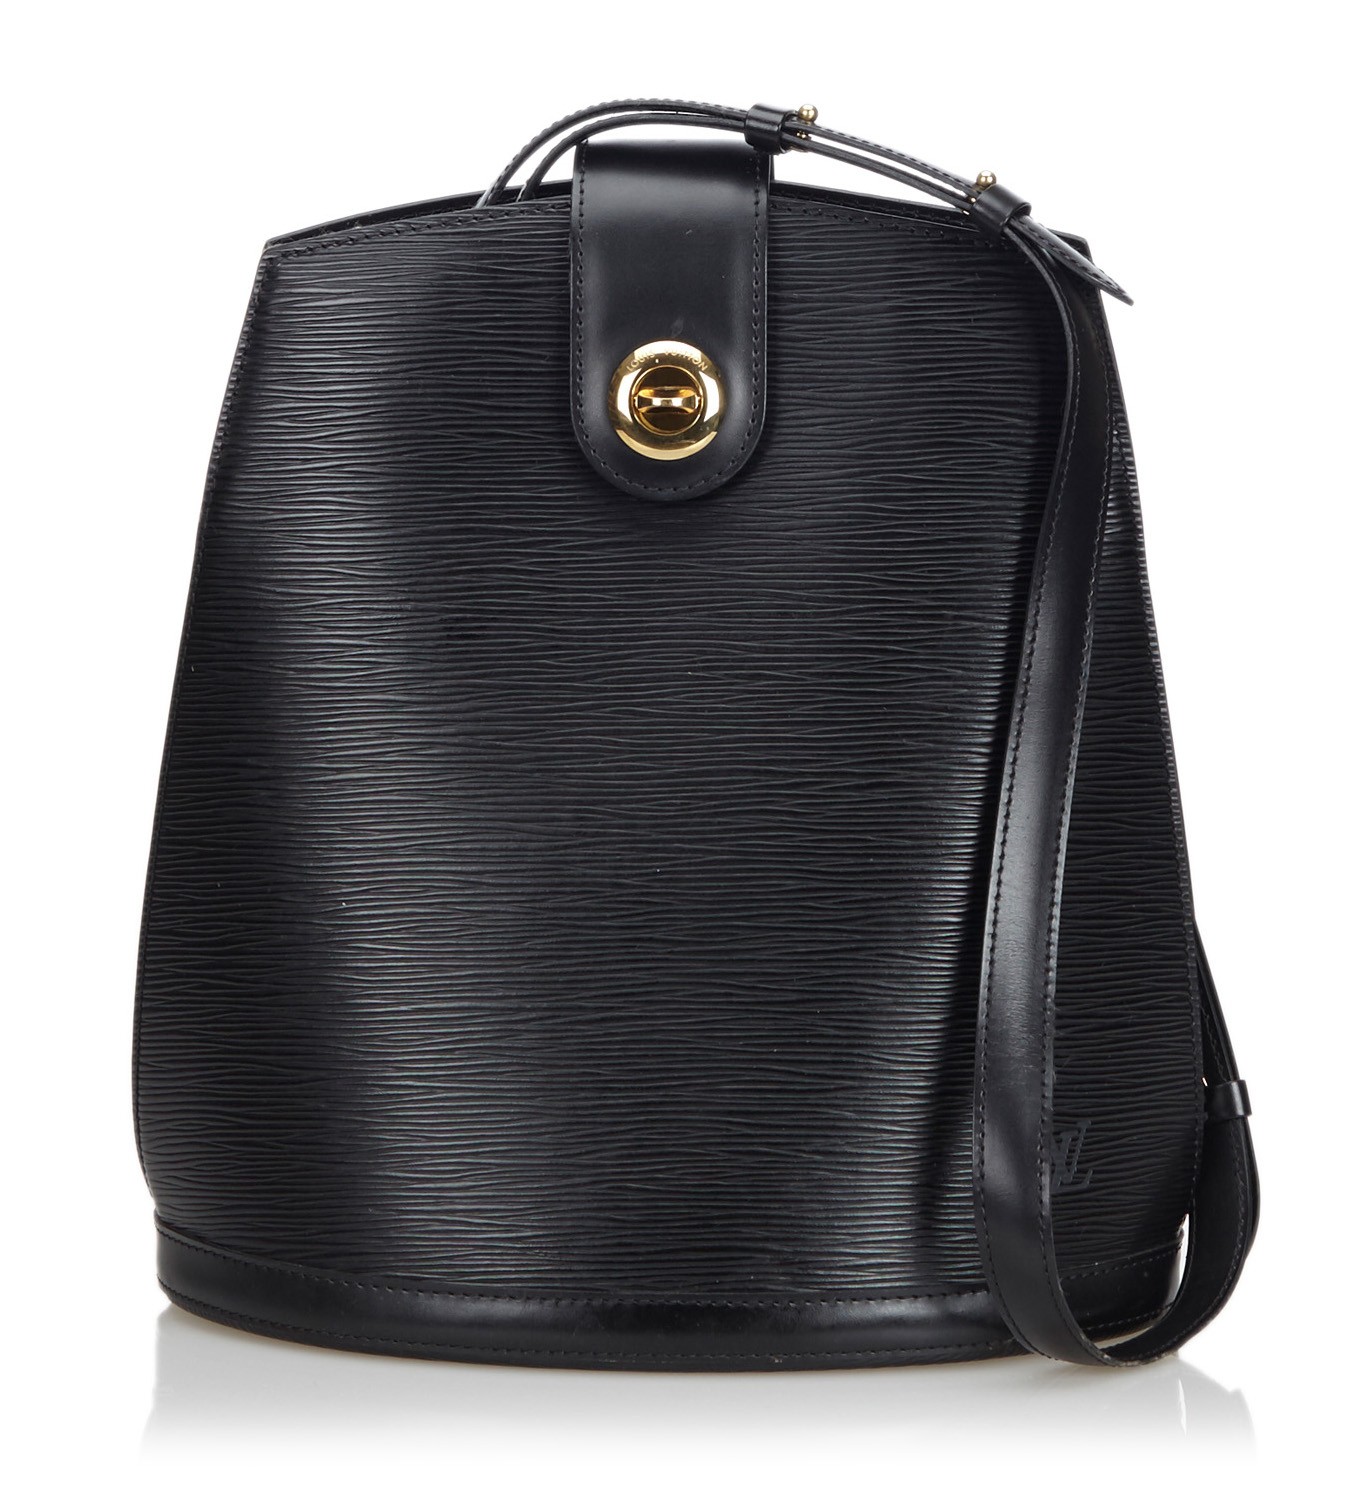 lv black leather handbag